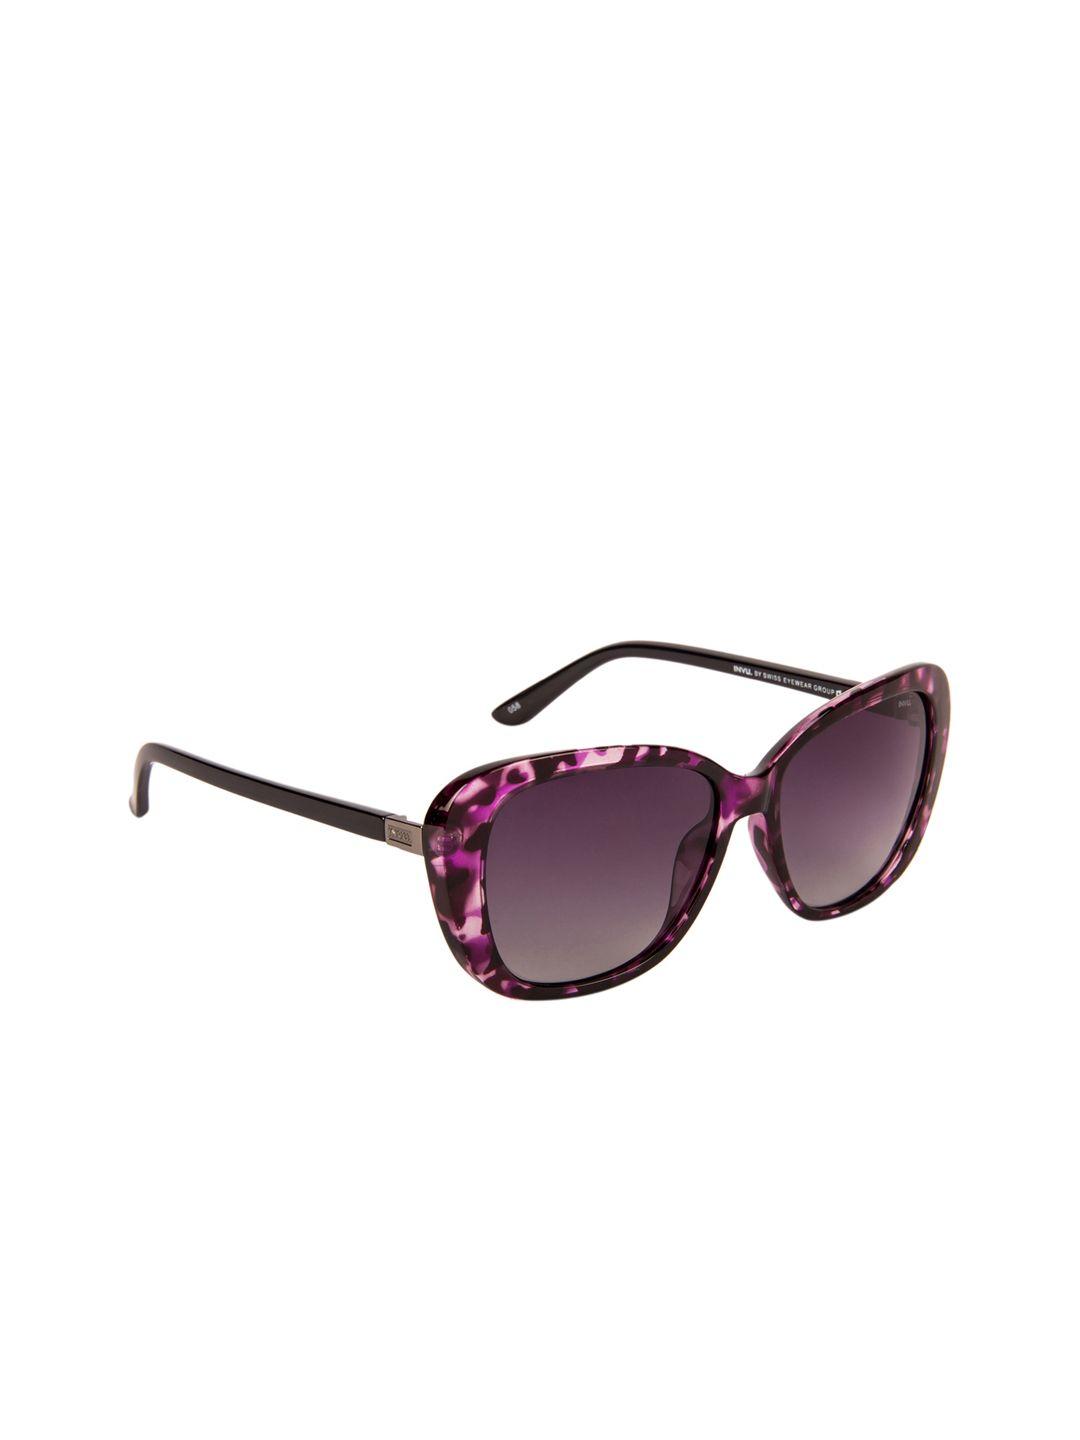 invu women cateye purple sunglasses b2906c